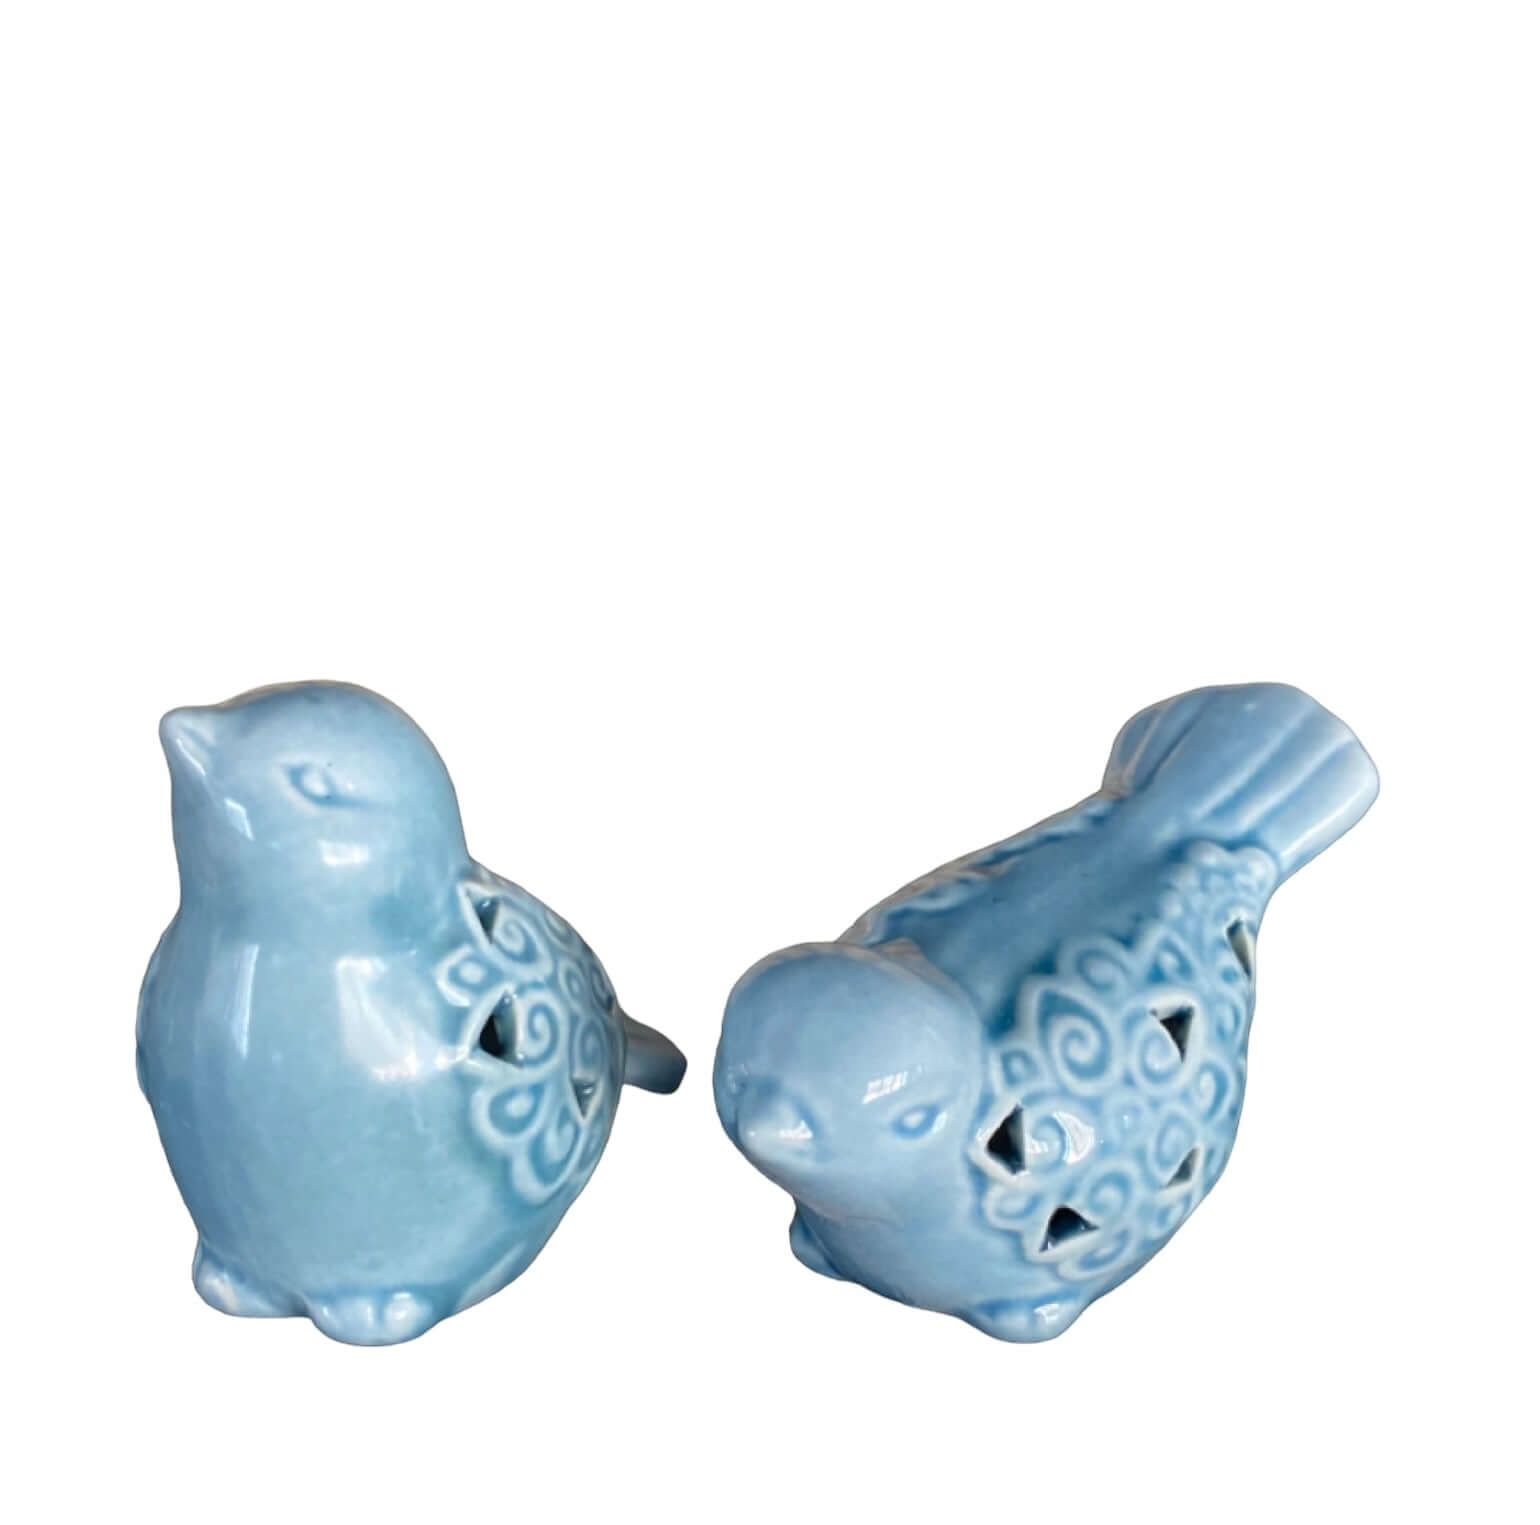 Bird Birds Blue Cute Décor Set Of 2 - The Renmy Store Homewares & Gifts 